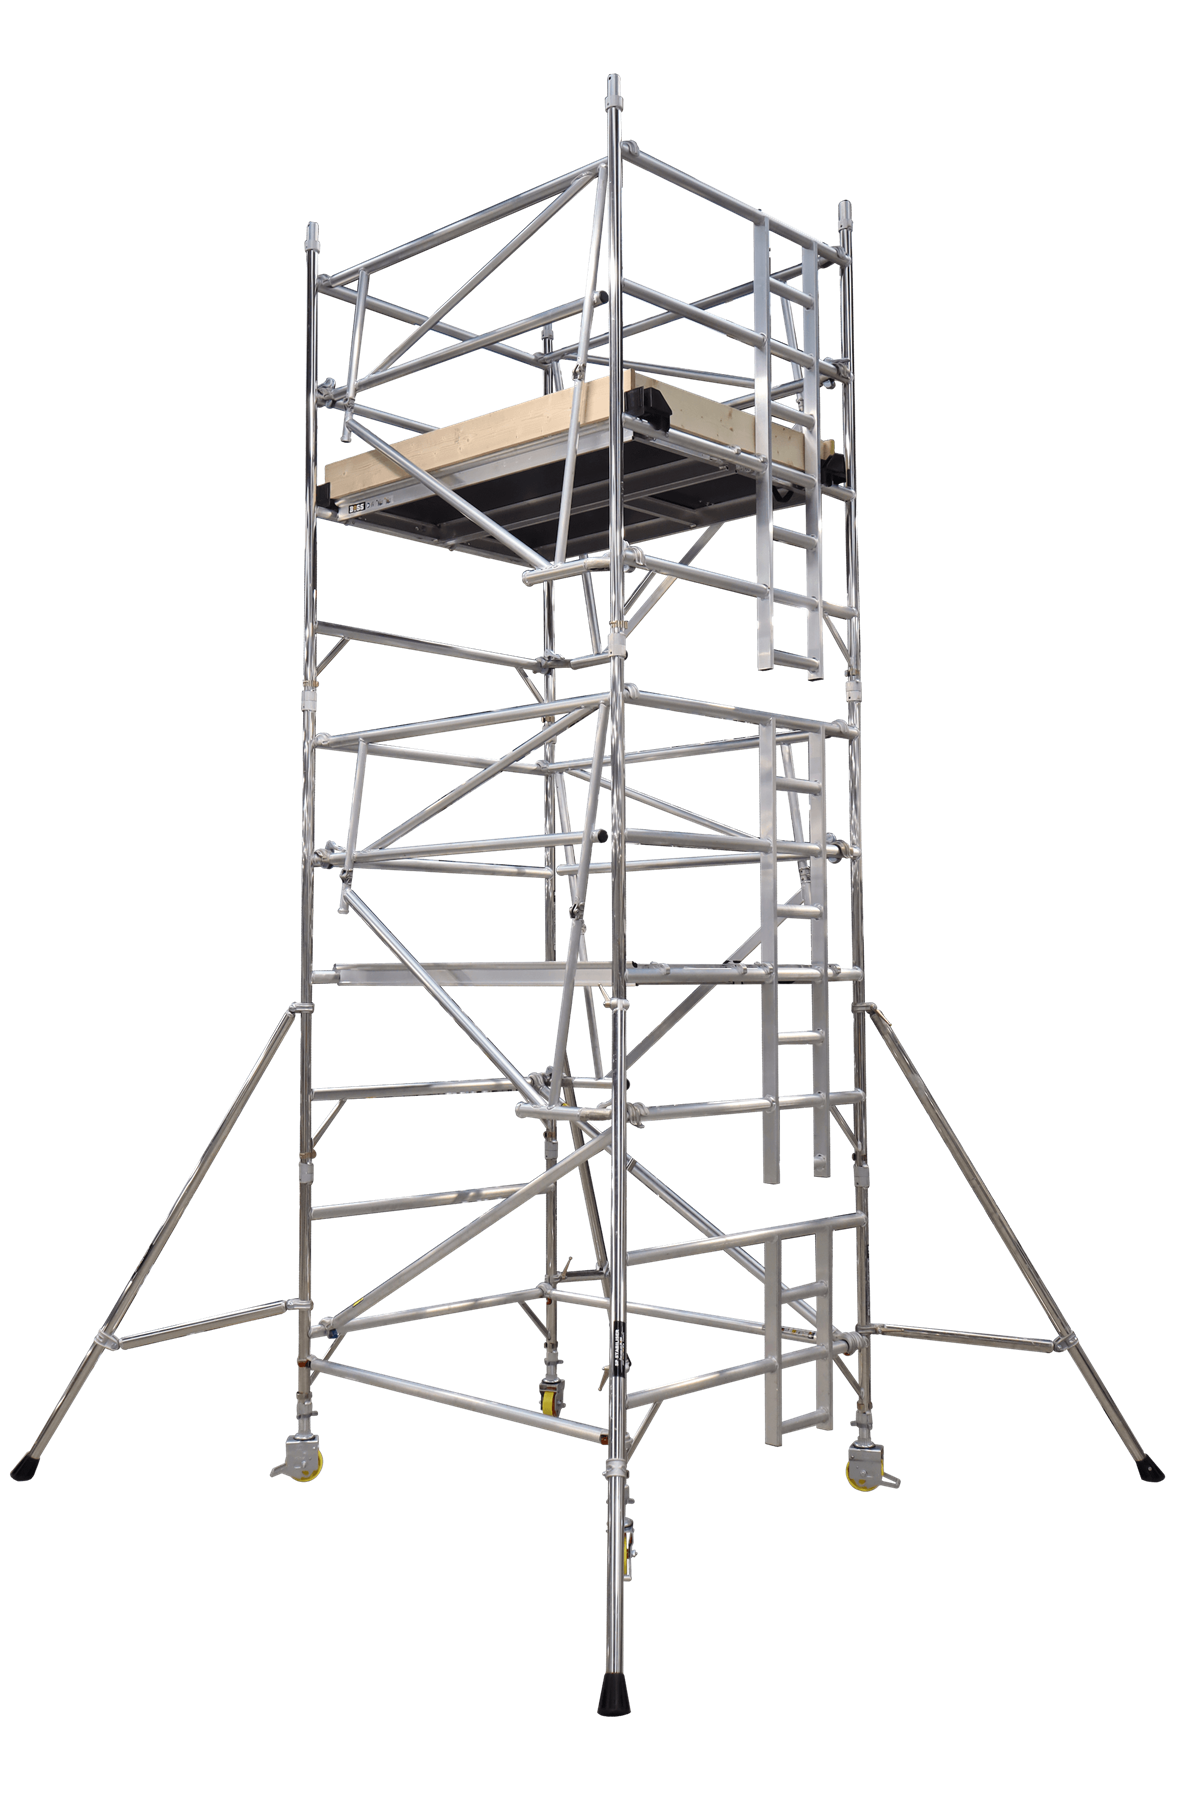 BoSS Ladderspan Aluminium Access Tower AGR Double Width